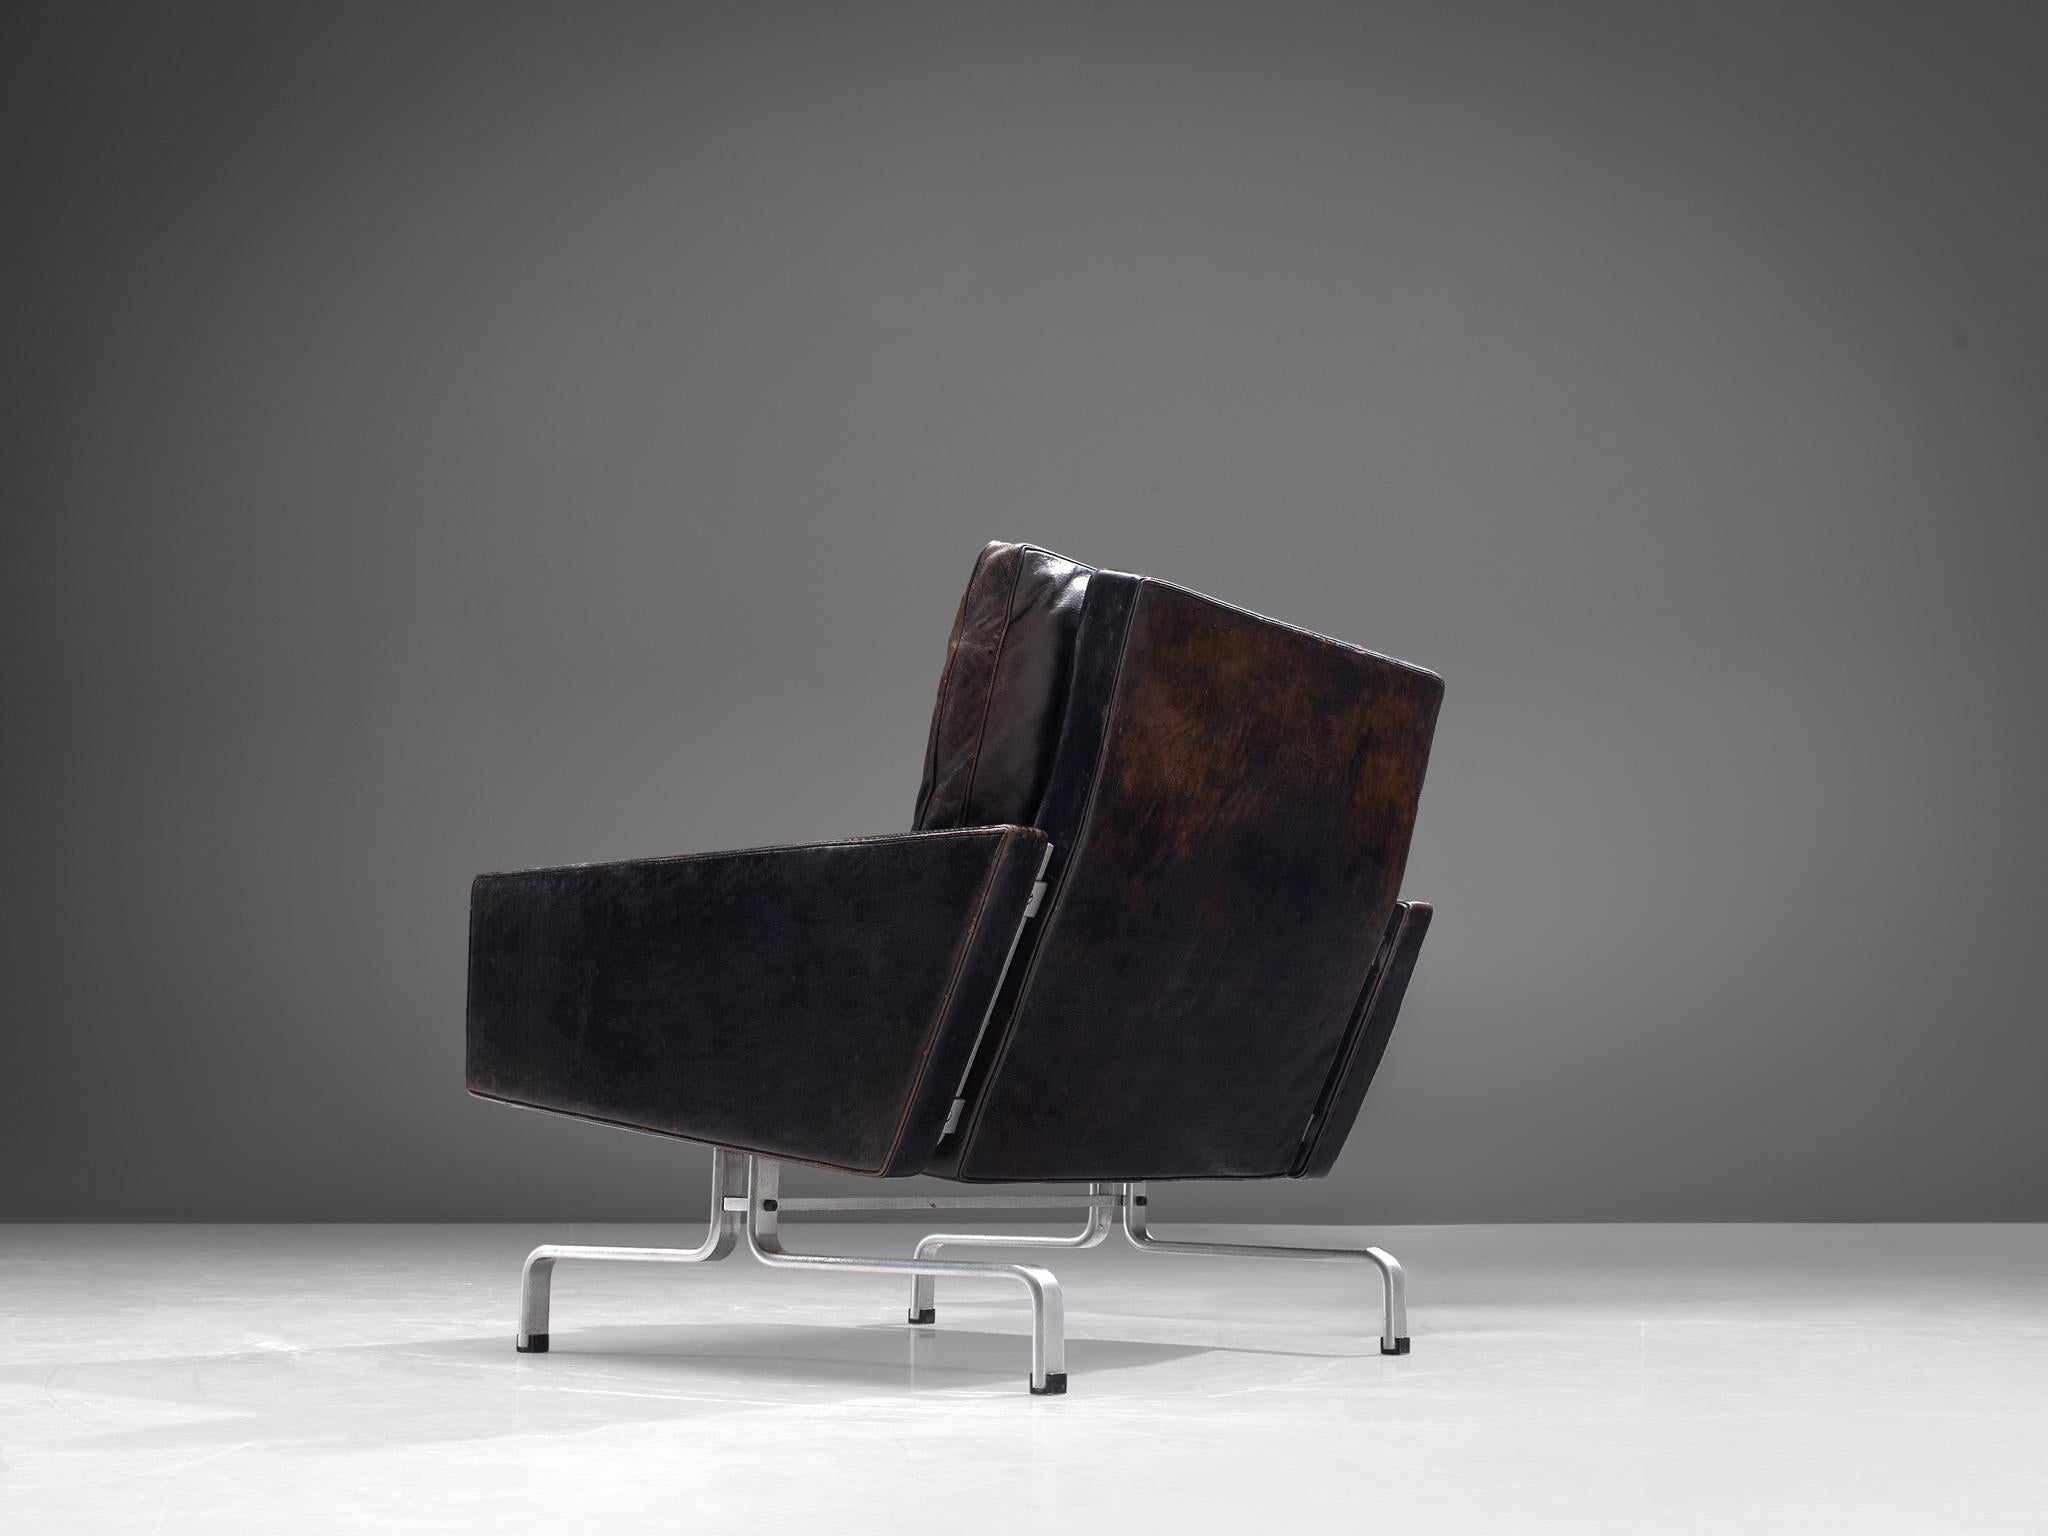 Poul Kjærholm 'PK31-1' Lounge Chair in Original Black Leather and Steel